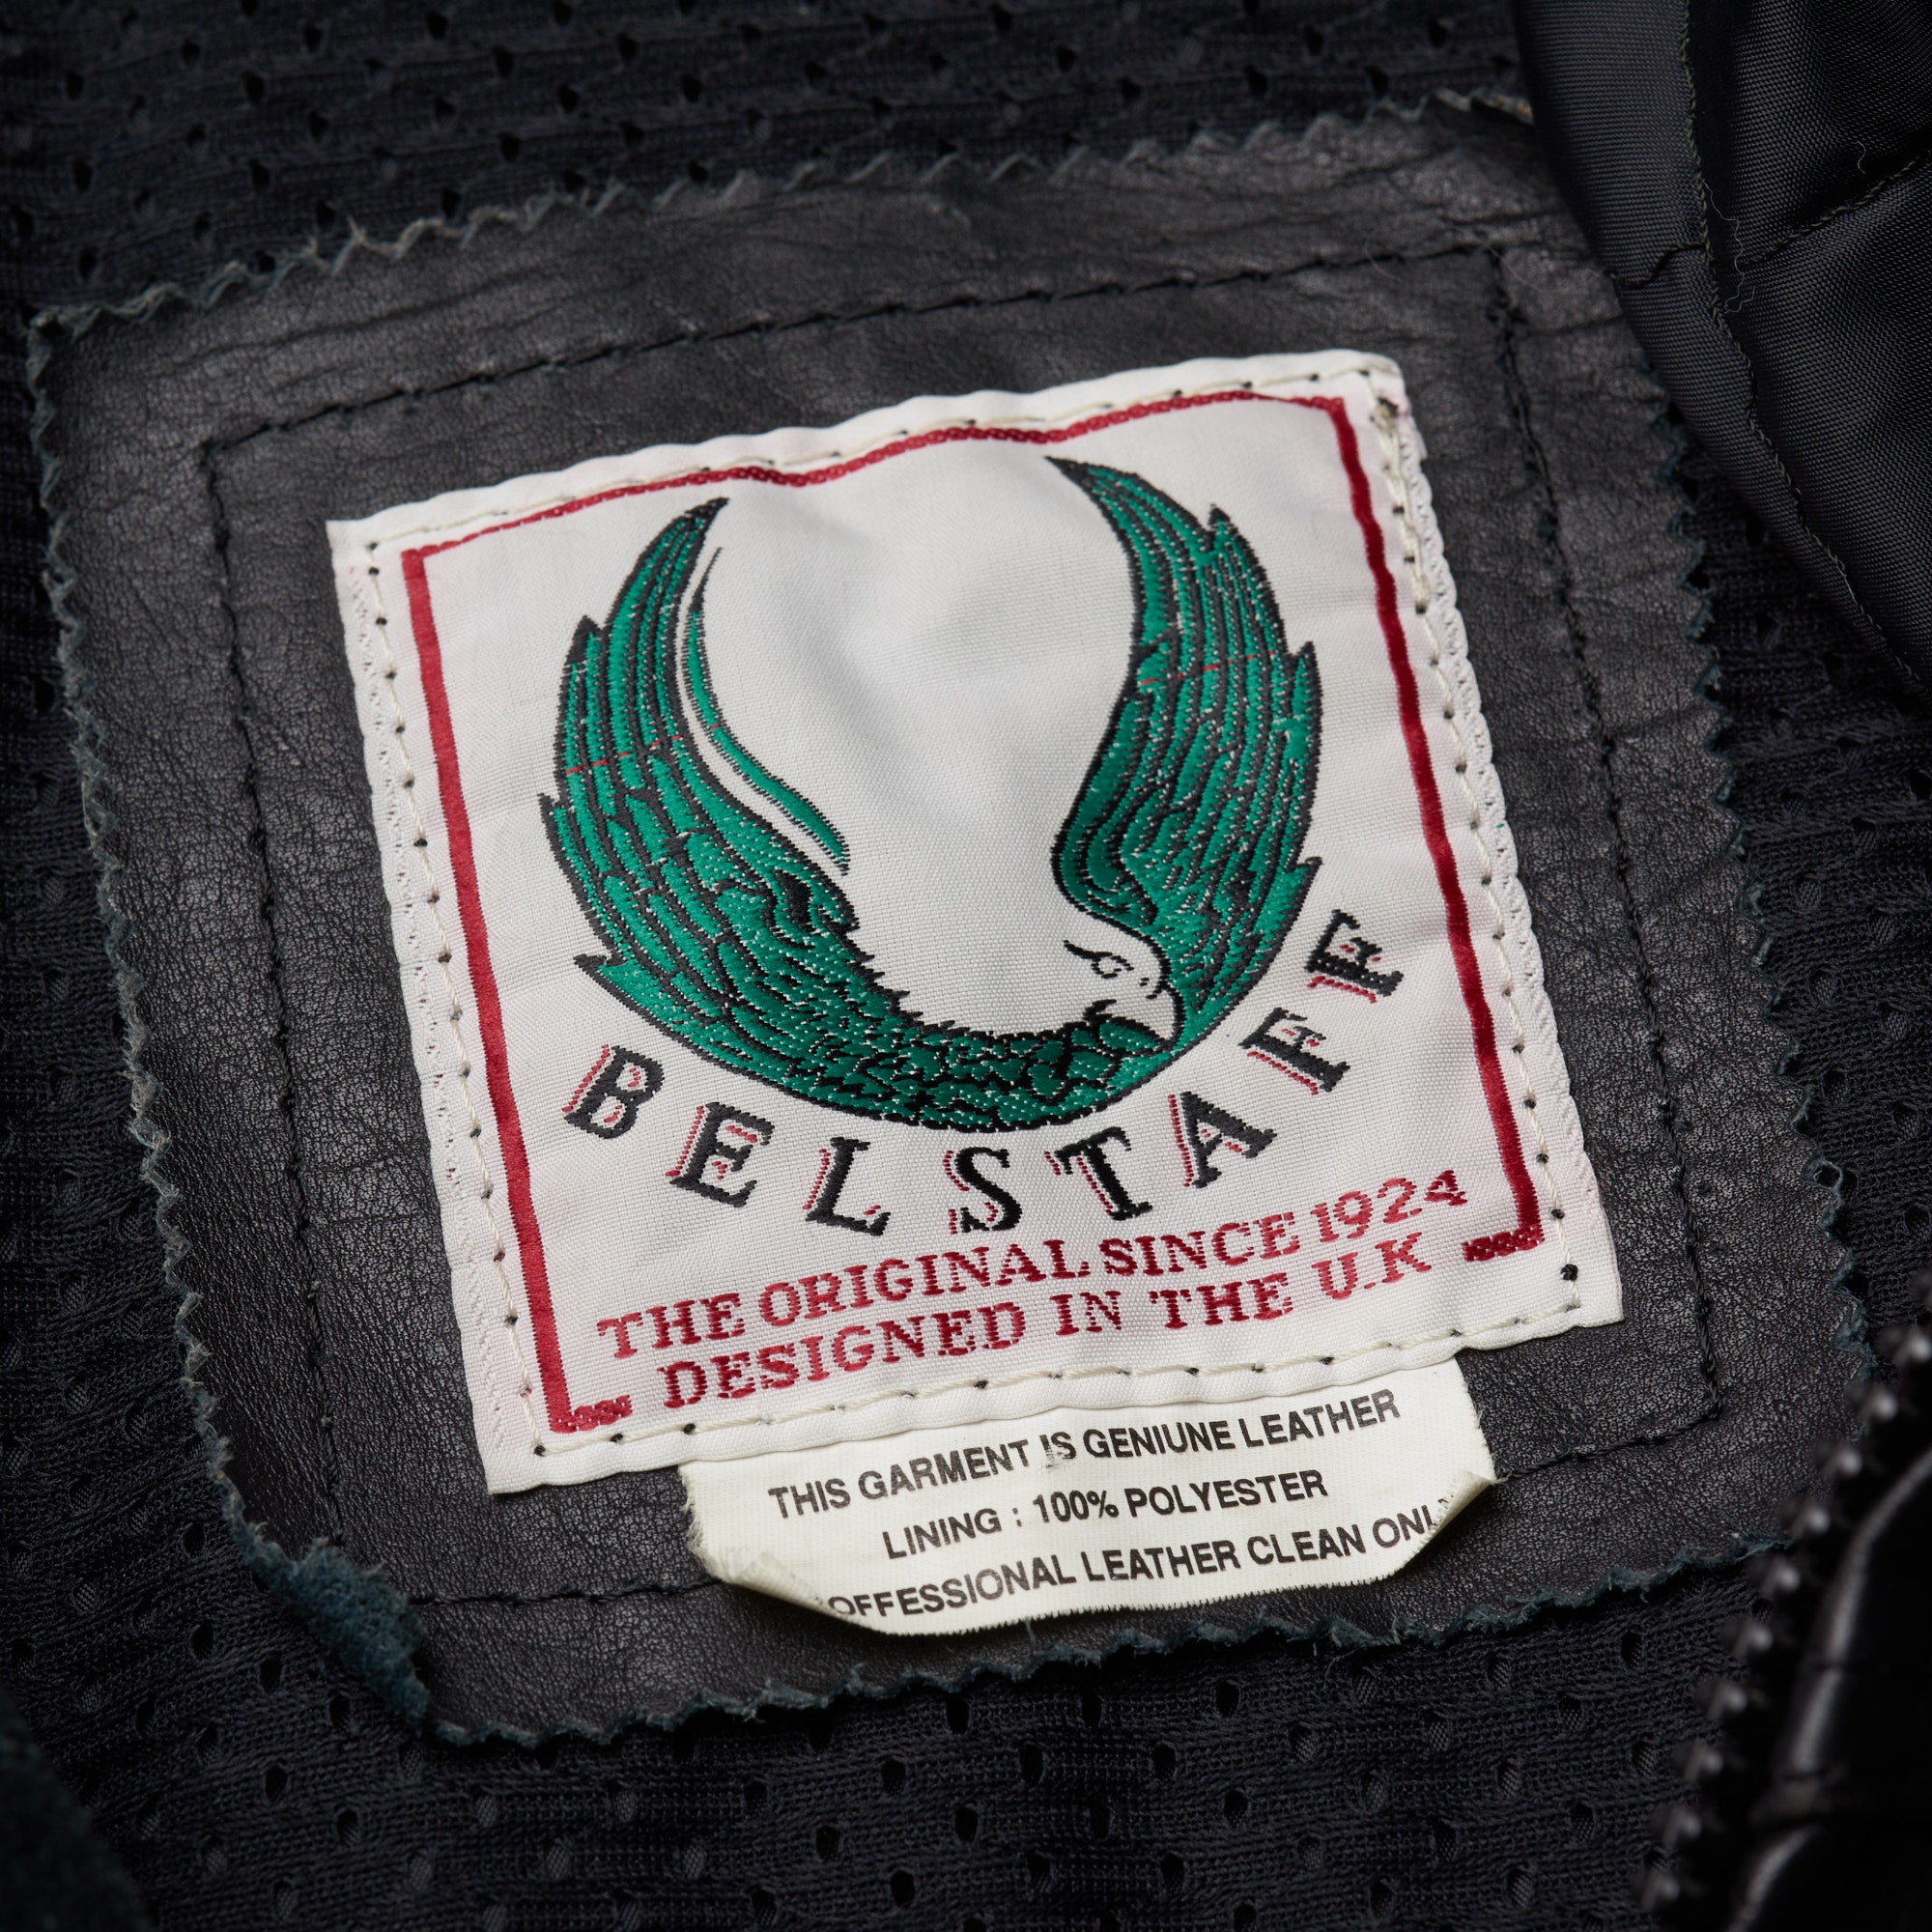 BELSTAFF Black Leather Motorcycle Jacket Protectors Size 44 US S Made in UK BELSTAFF